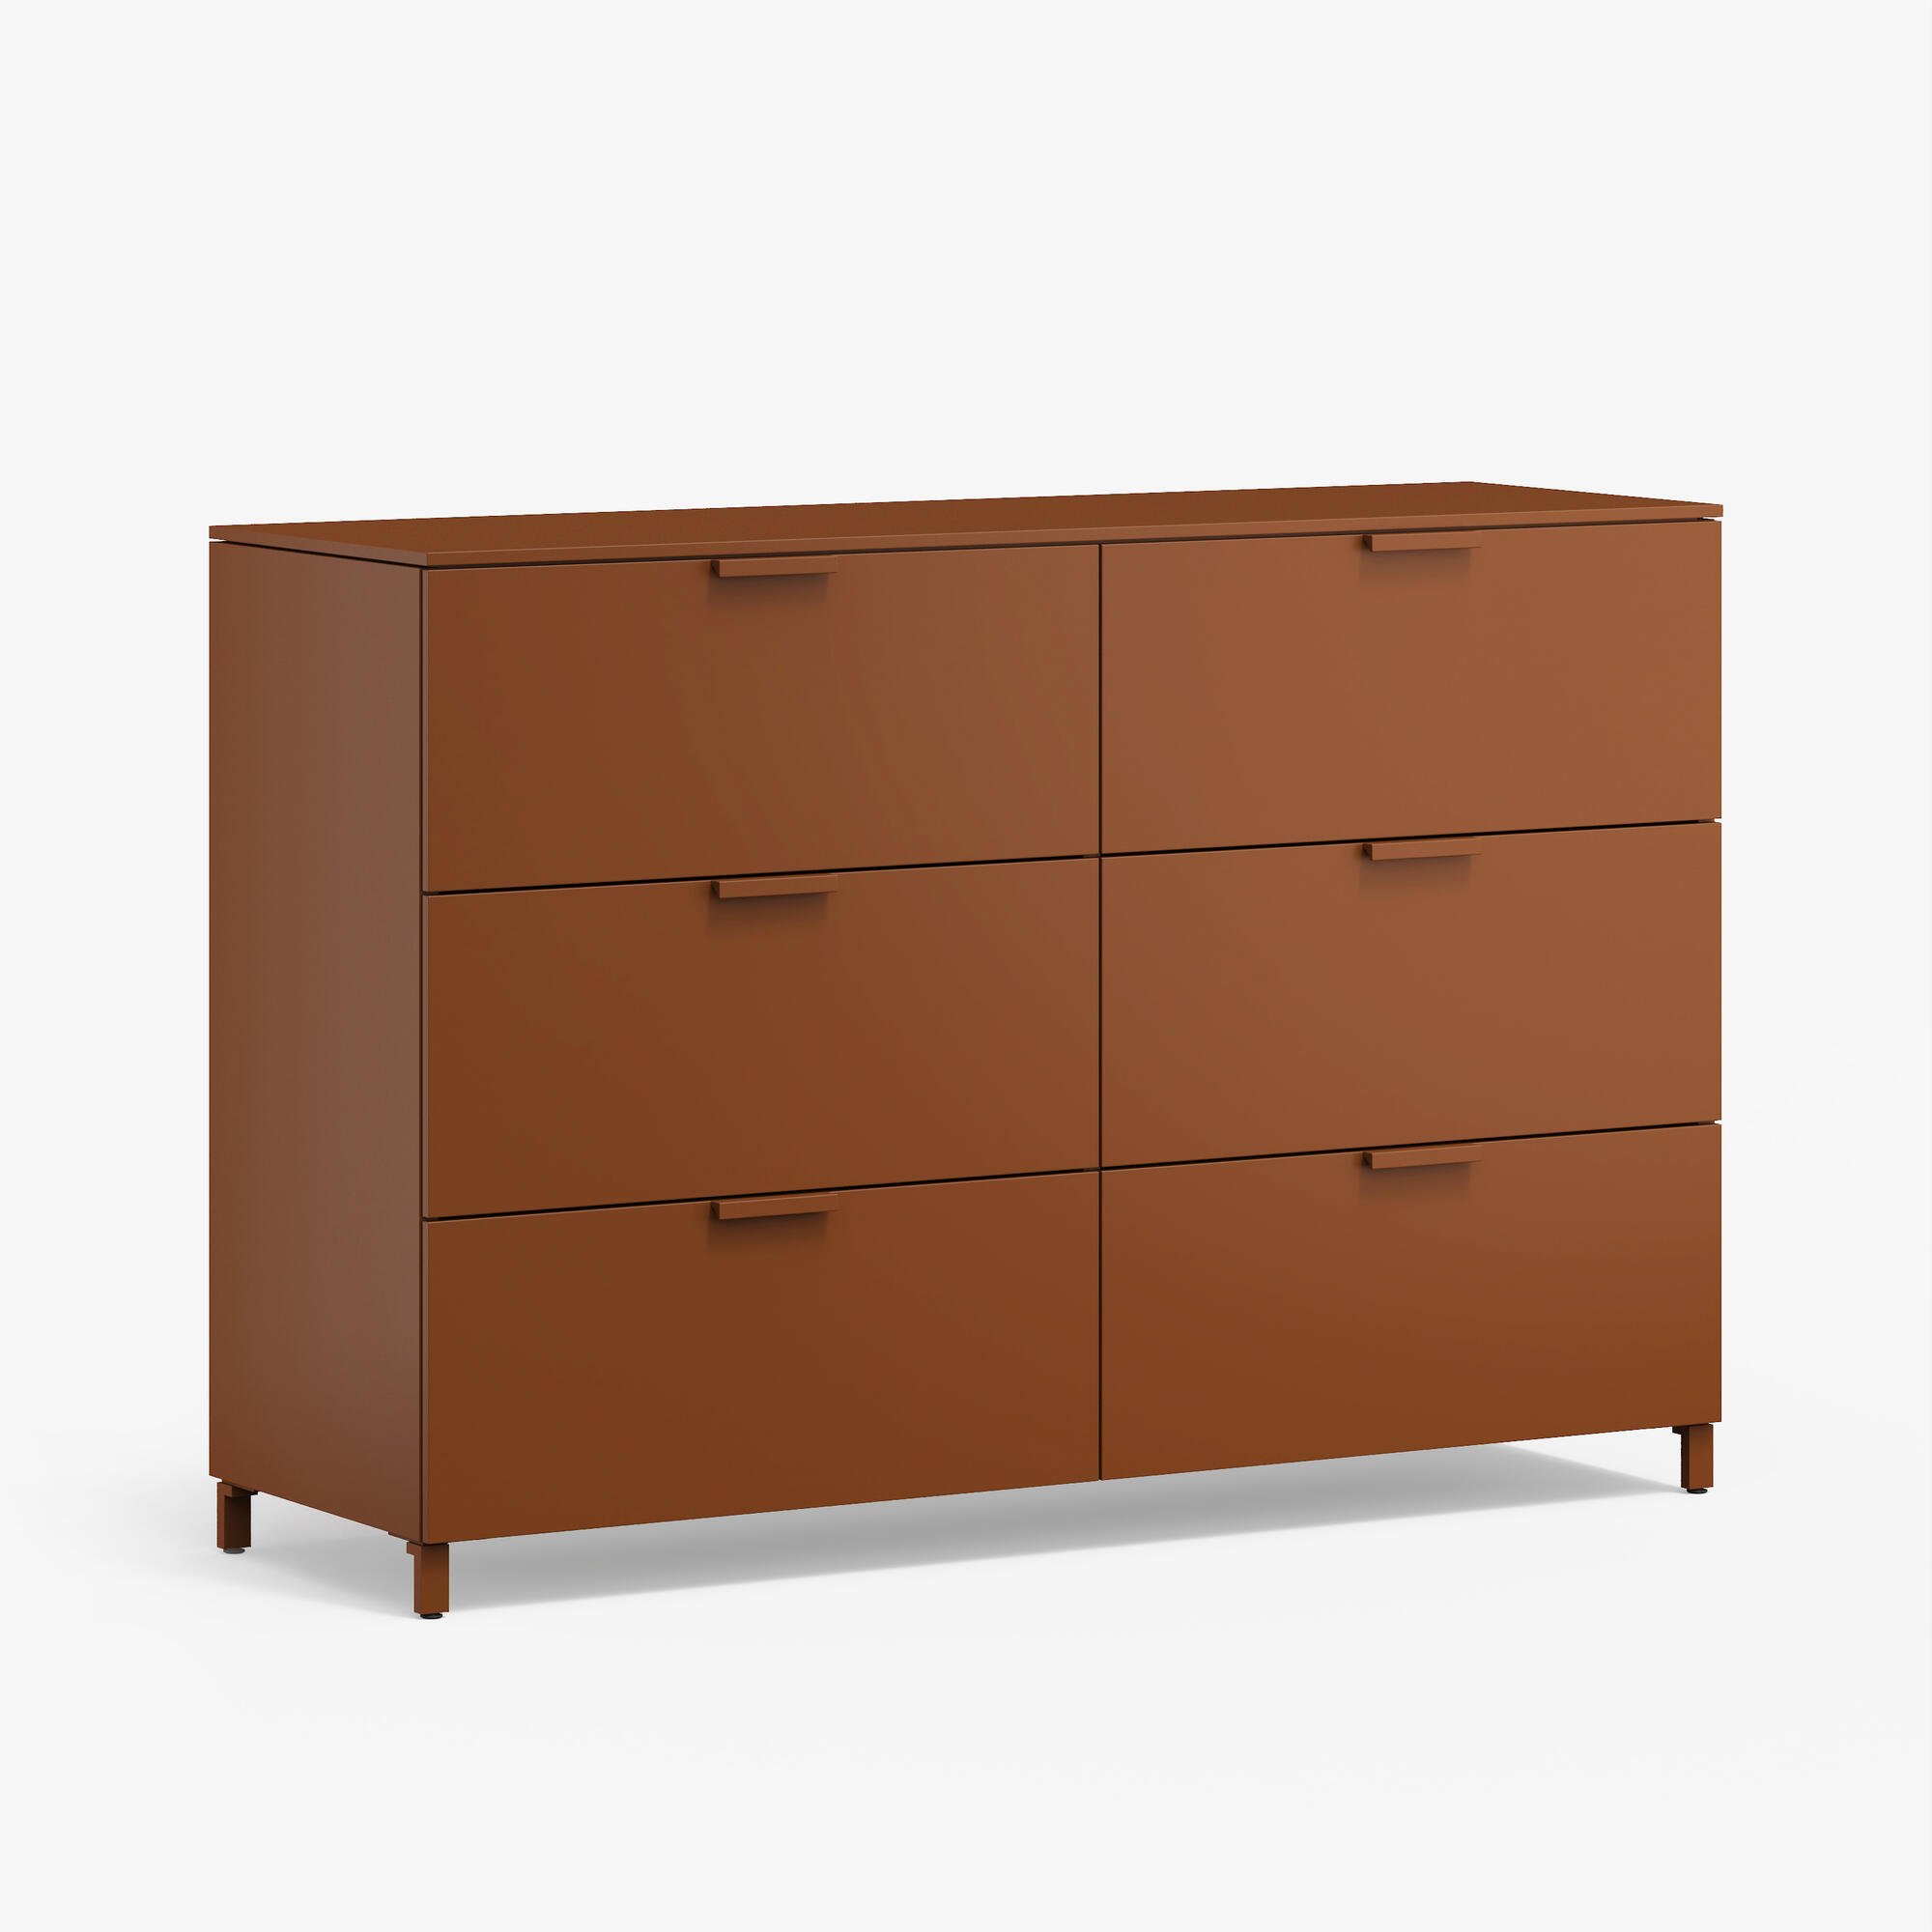 Image Sideboard unit 6 drawers c 23 2